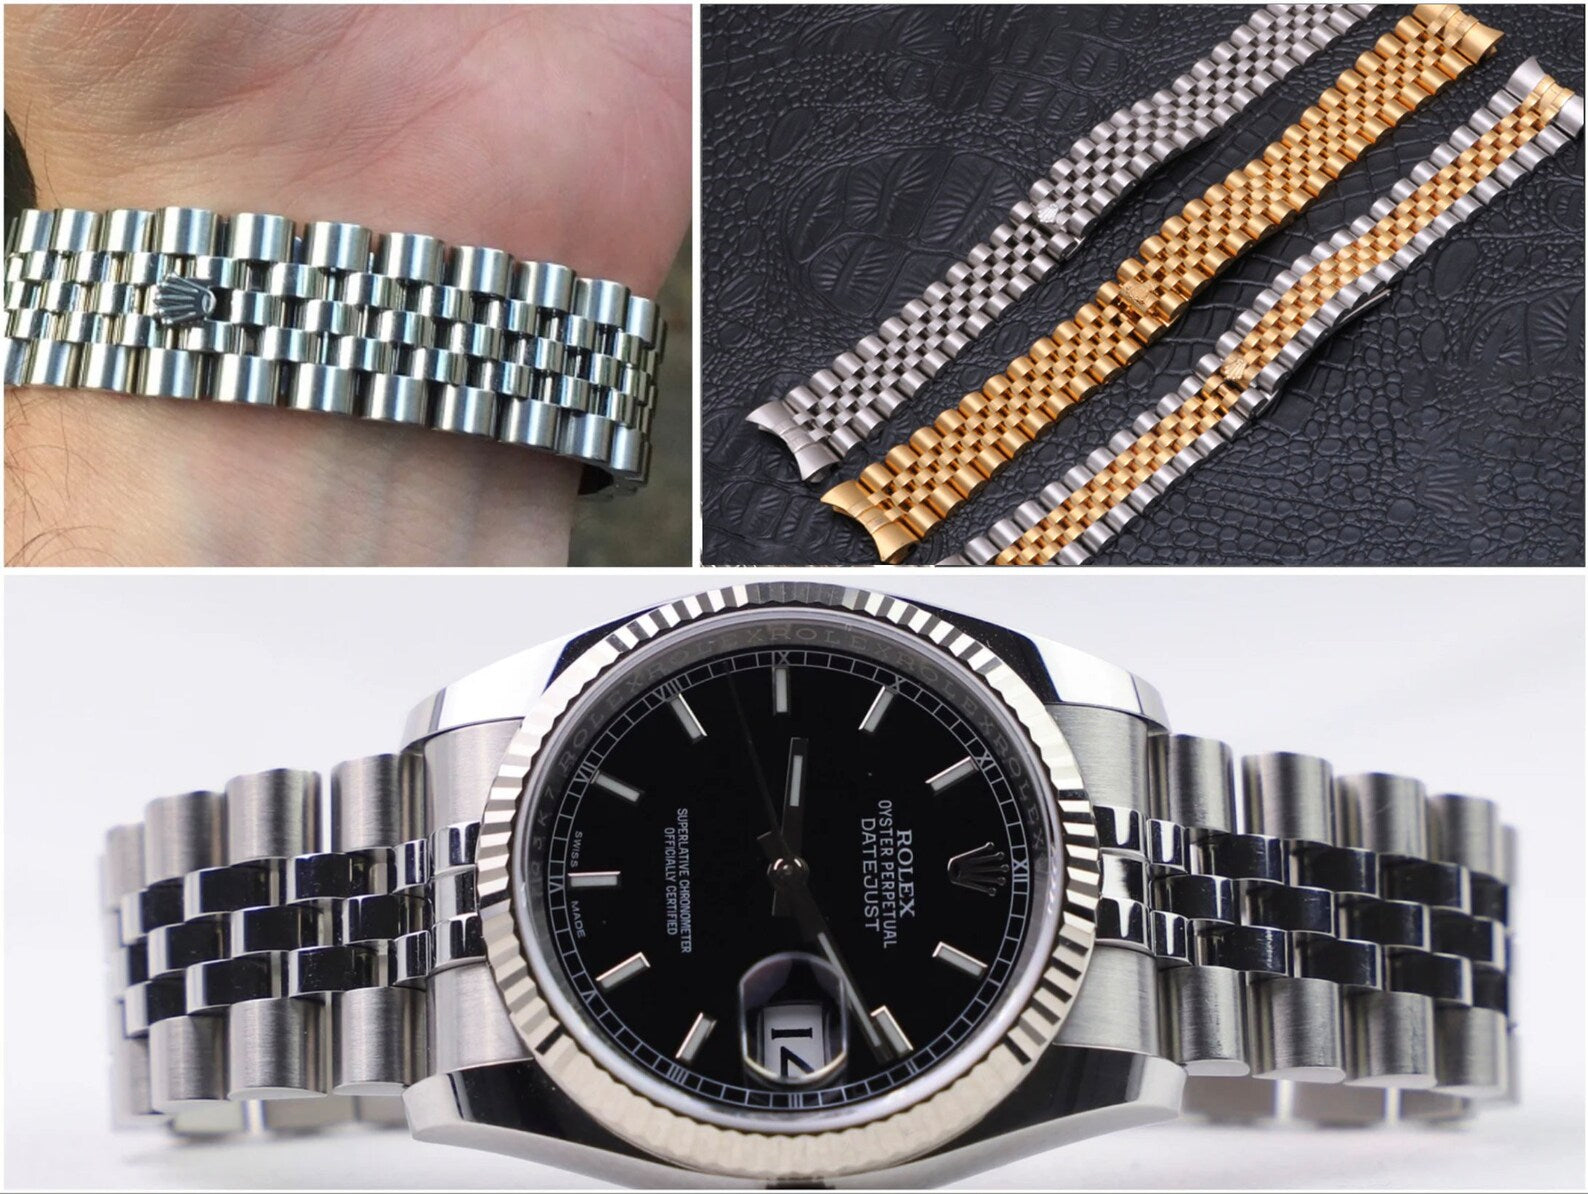 Rolex Bracelet Tightening: To Tighten or Not to Tighten | The Watch Buyers  Group